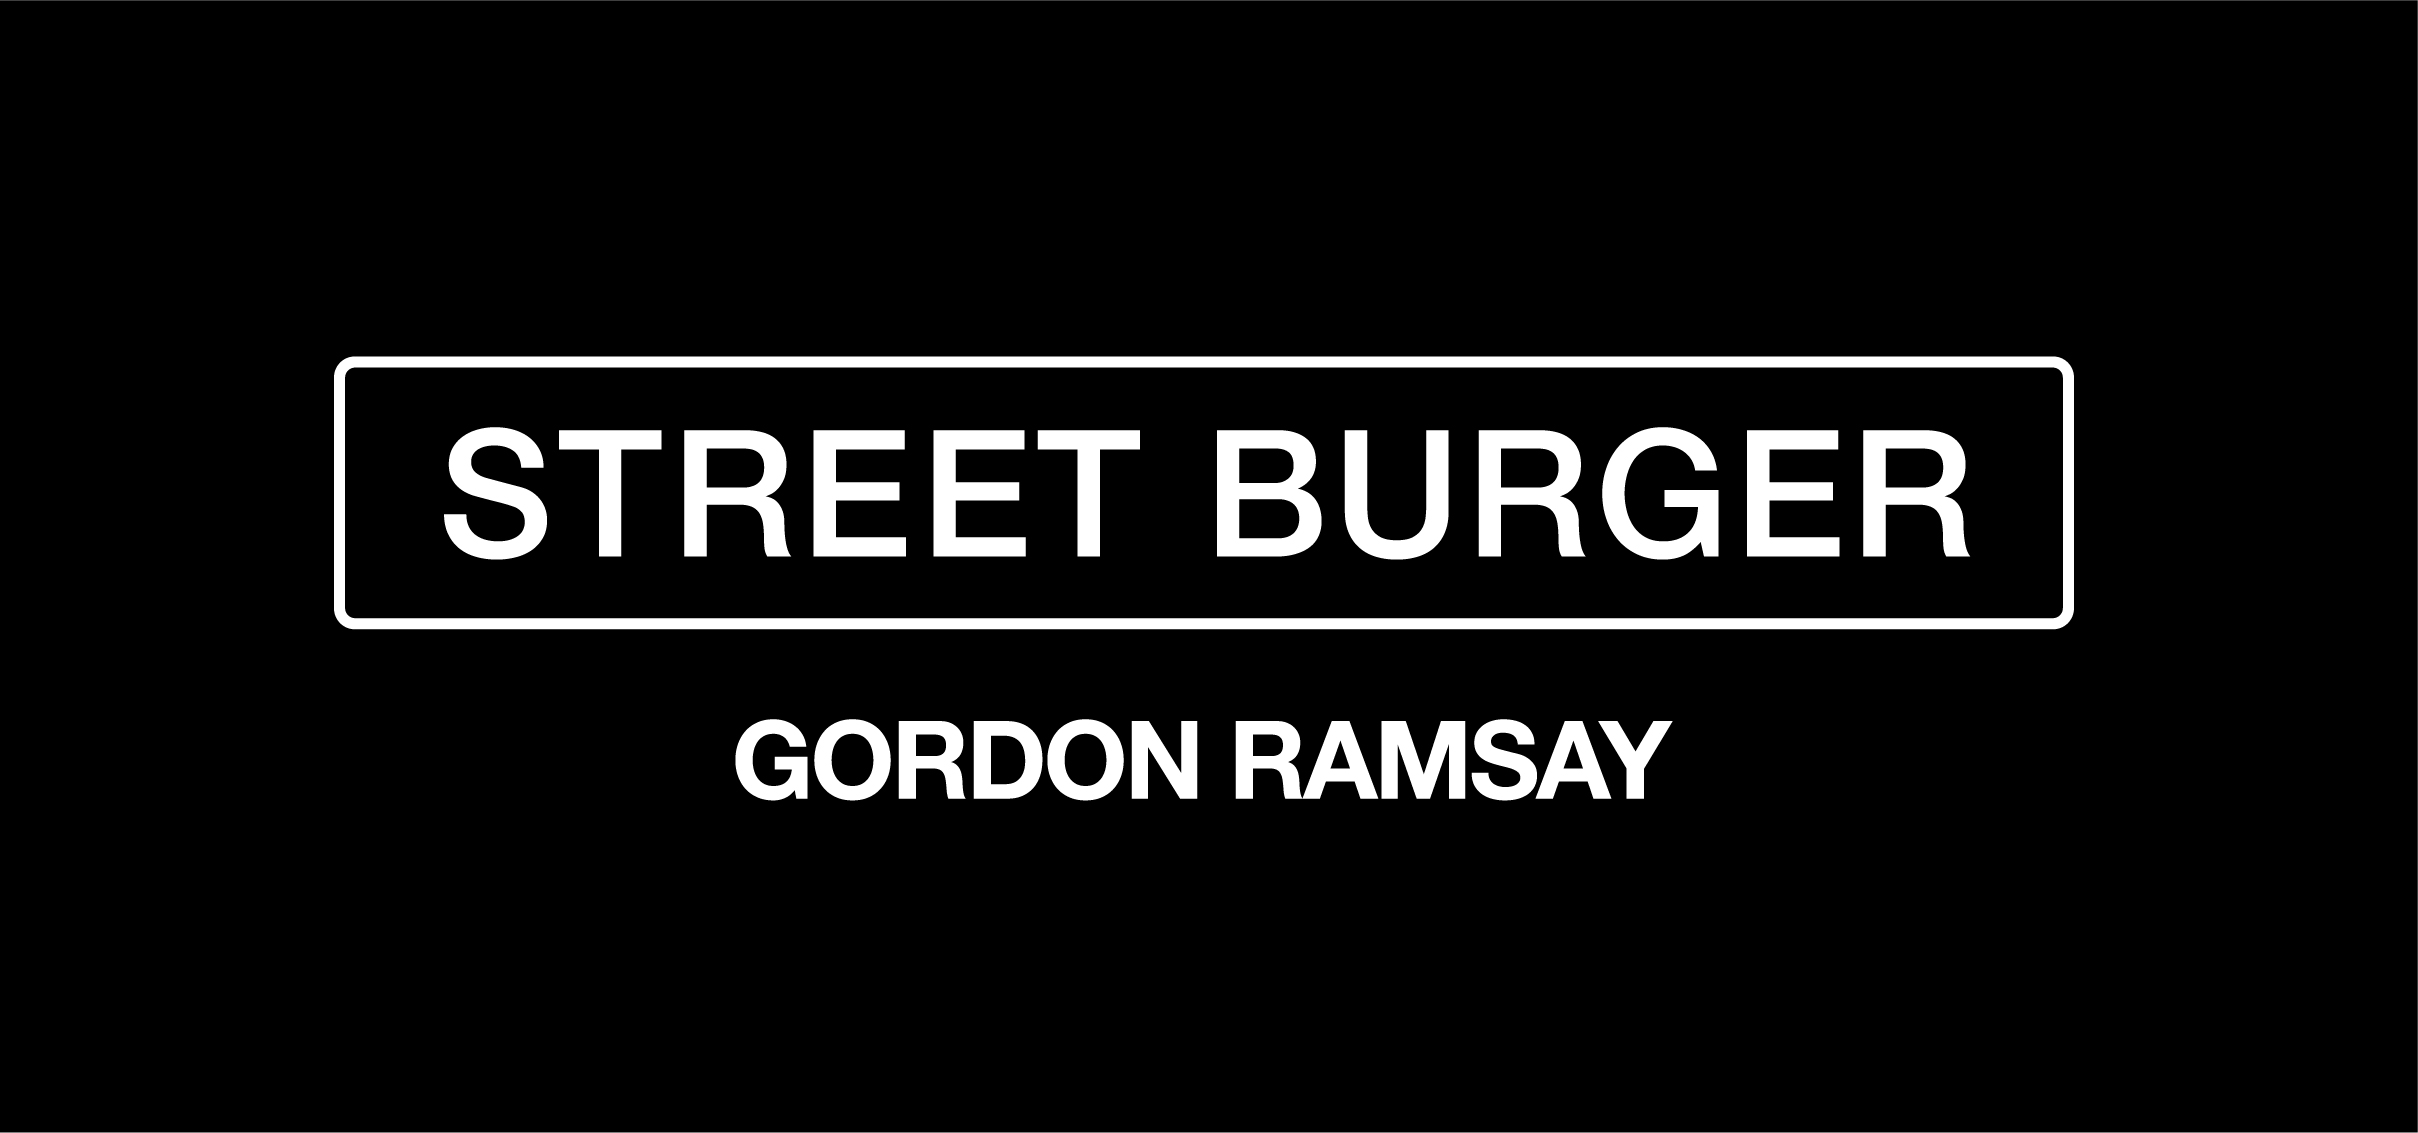 Gordon Ramsay Street Burger